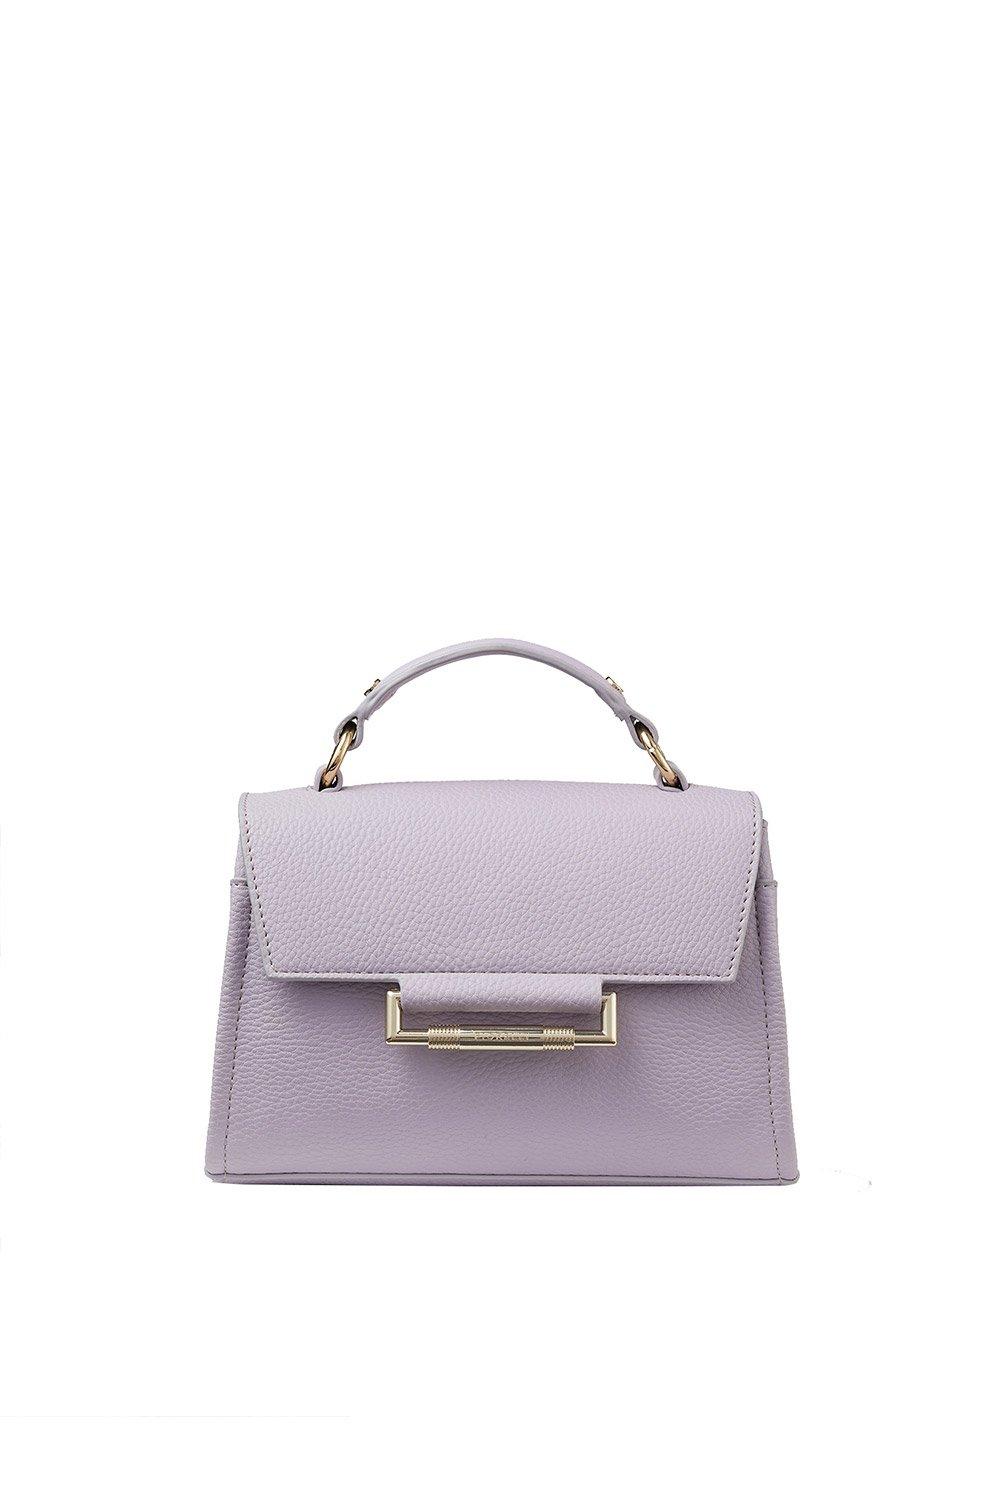 Yves Saint Laurent Handbags for sale in Bellport, New York | Facebook  Marketplace | Facebook